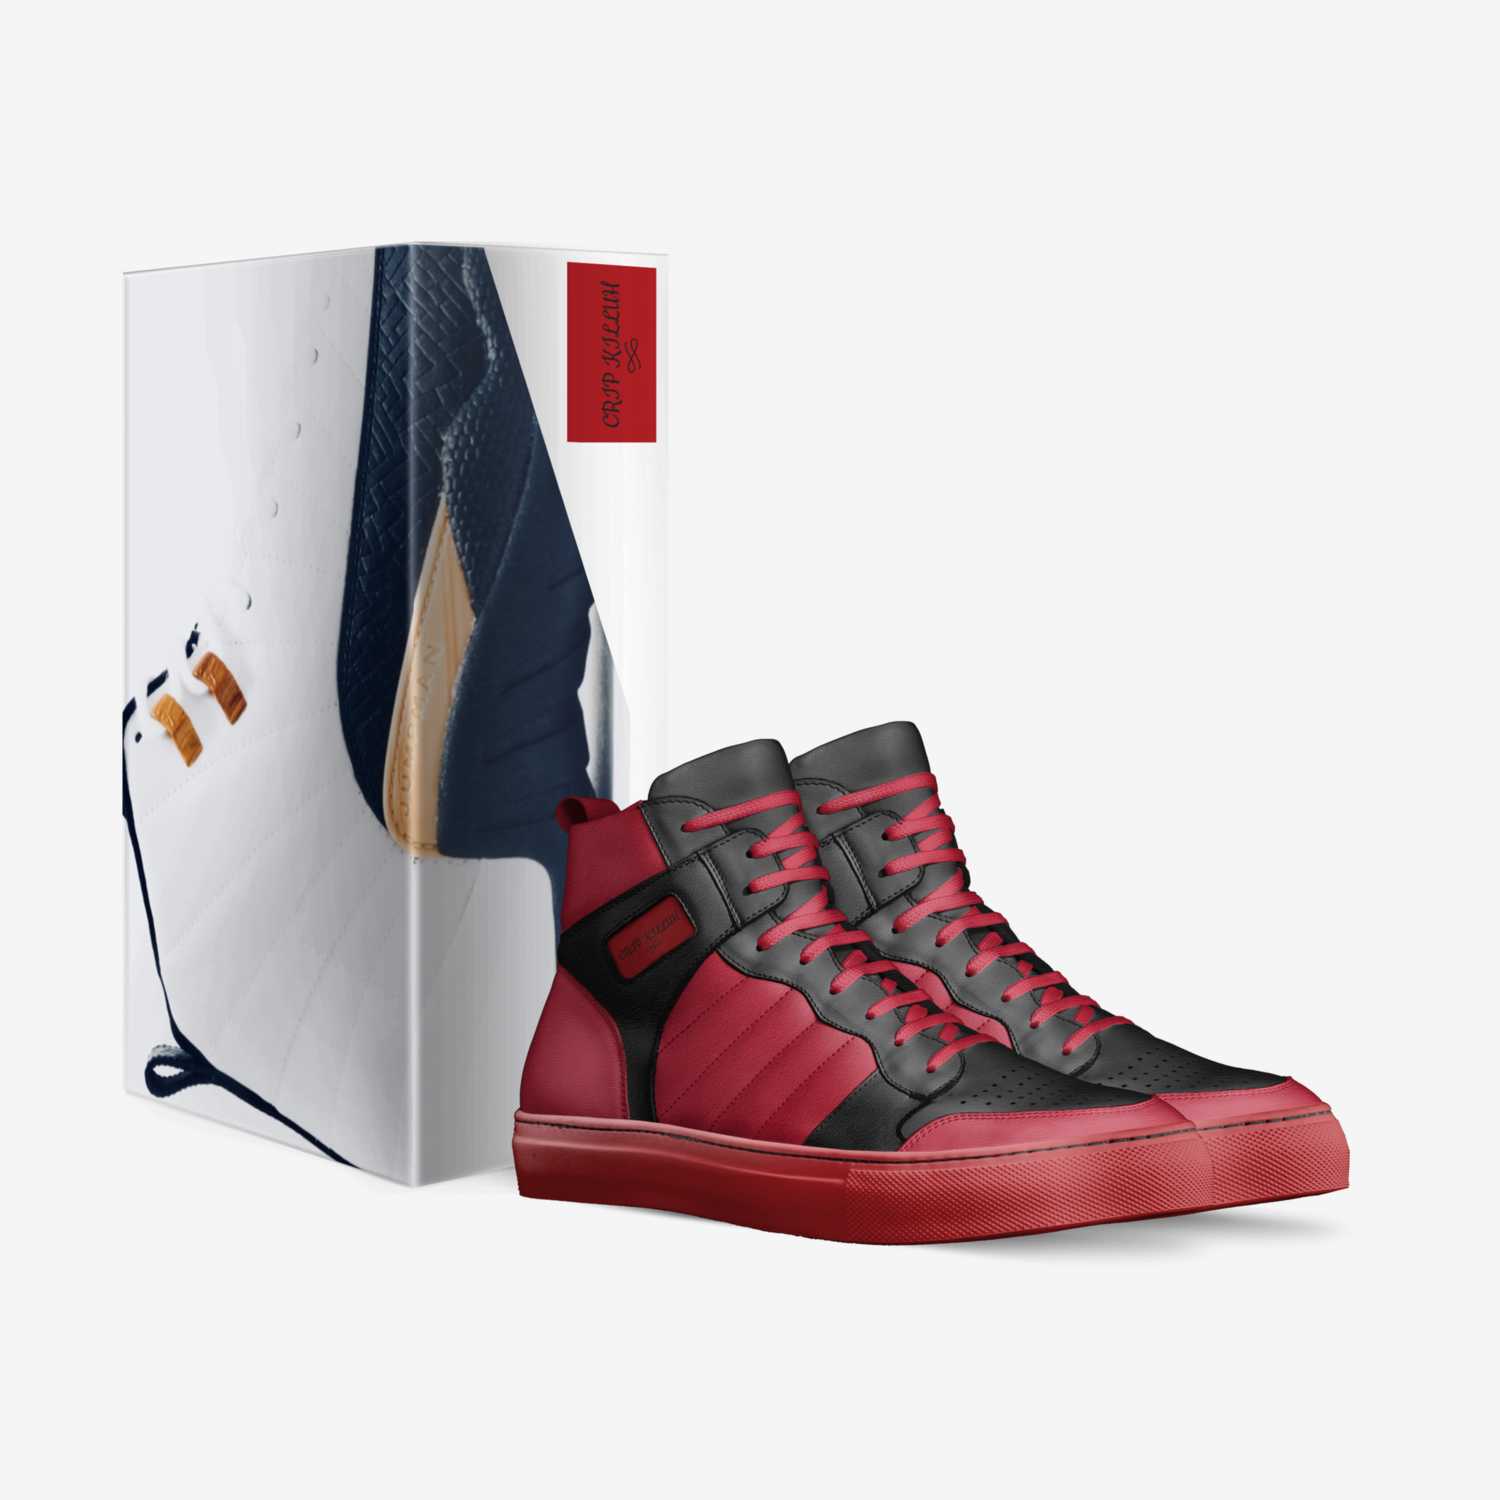 CRIP KILLUH custom made in Italy shoes by Damien Polanco | Box view